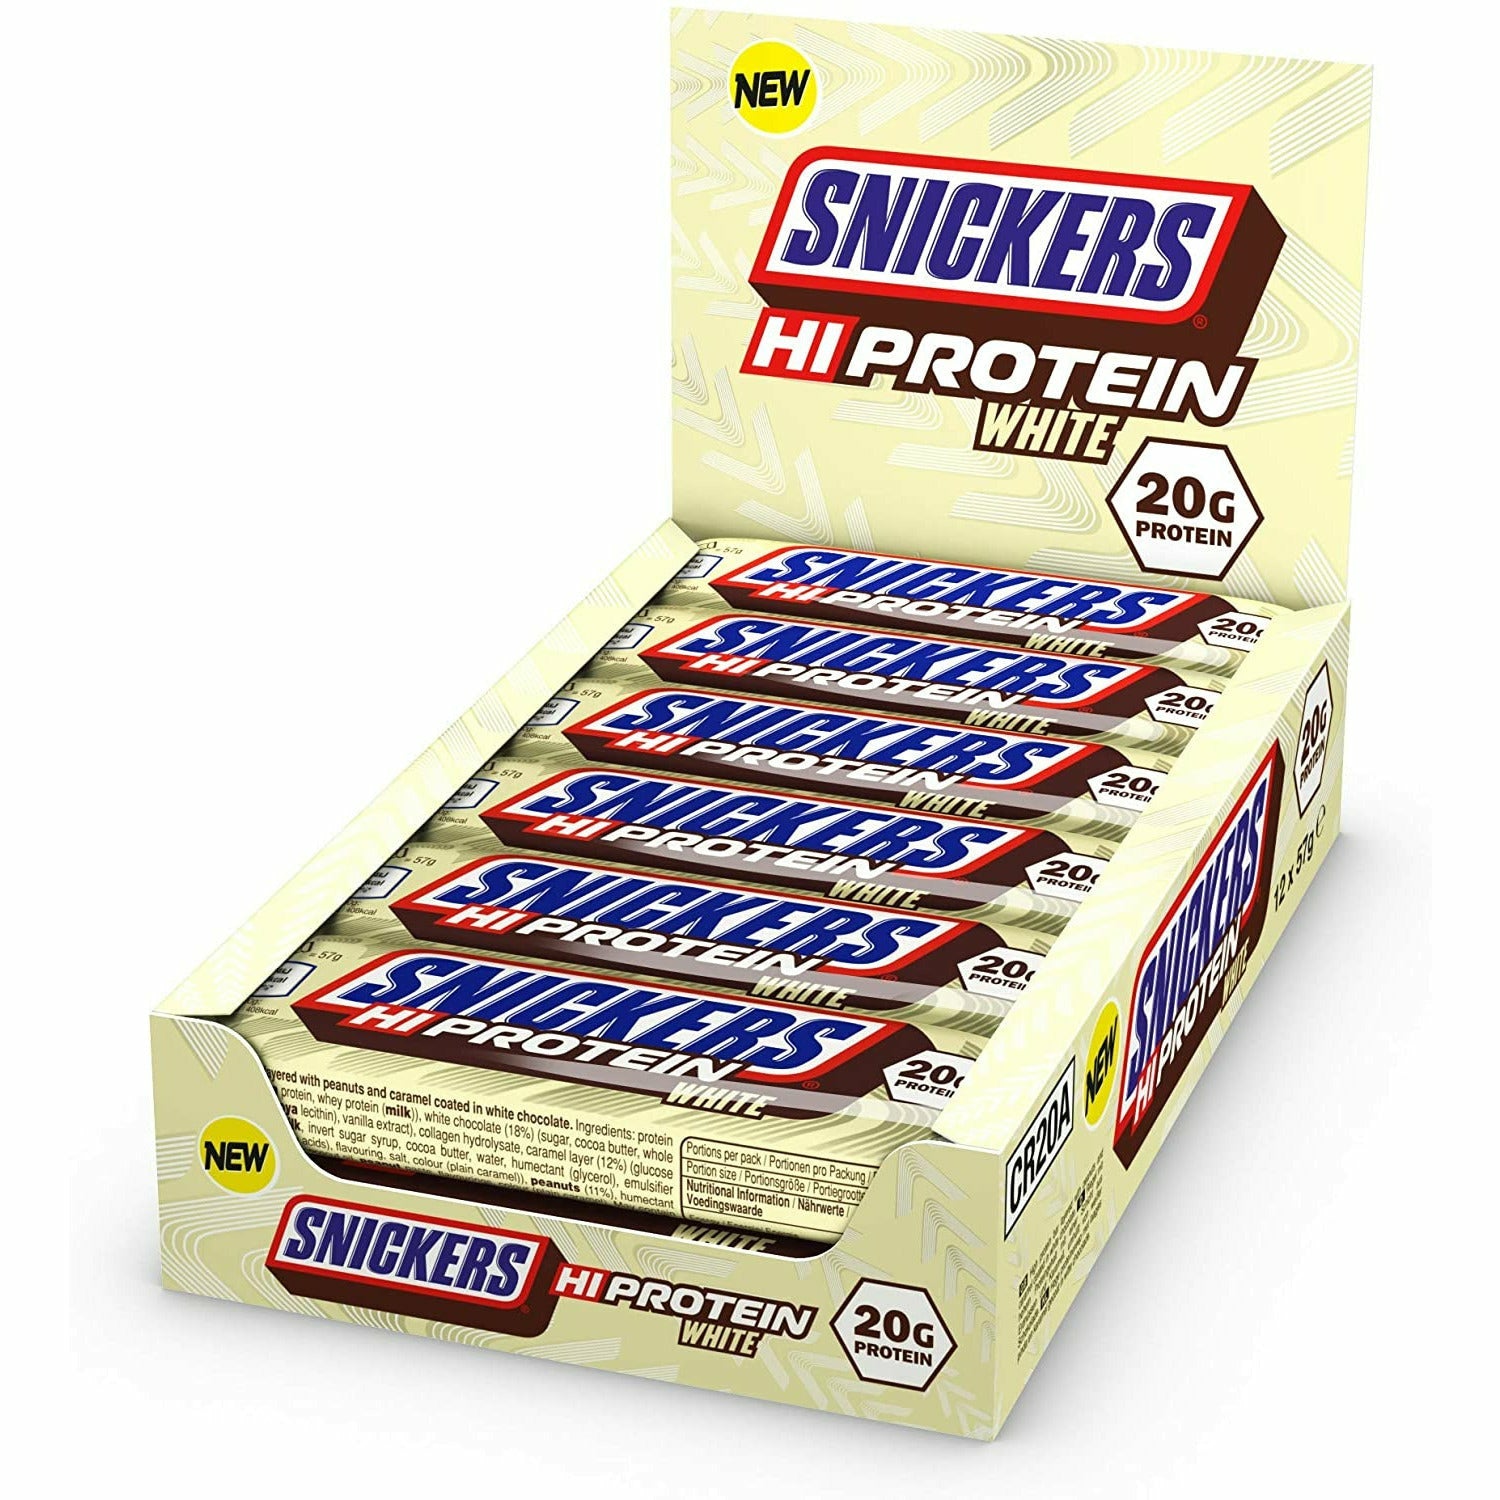 Mars Brand Hi-Protein Bar (1 BOX of 12) mars-brand-hi-protein-bar-1-box-of-12 Protein Snacks Snickers White Chocolate BEST BY JAN/2023 Mars Brand